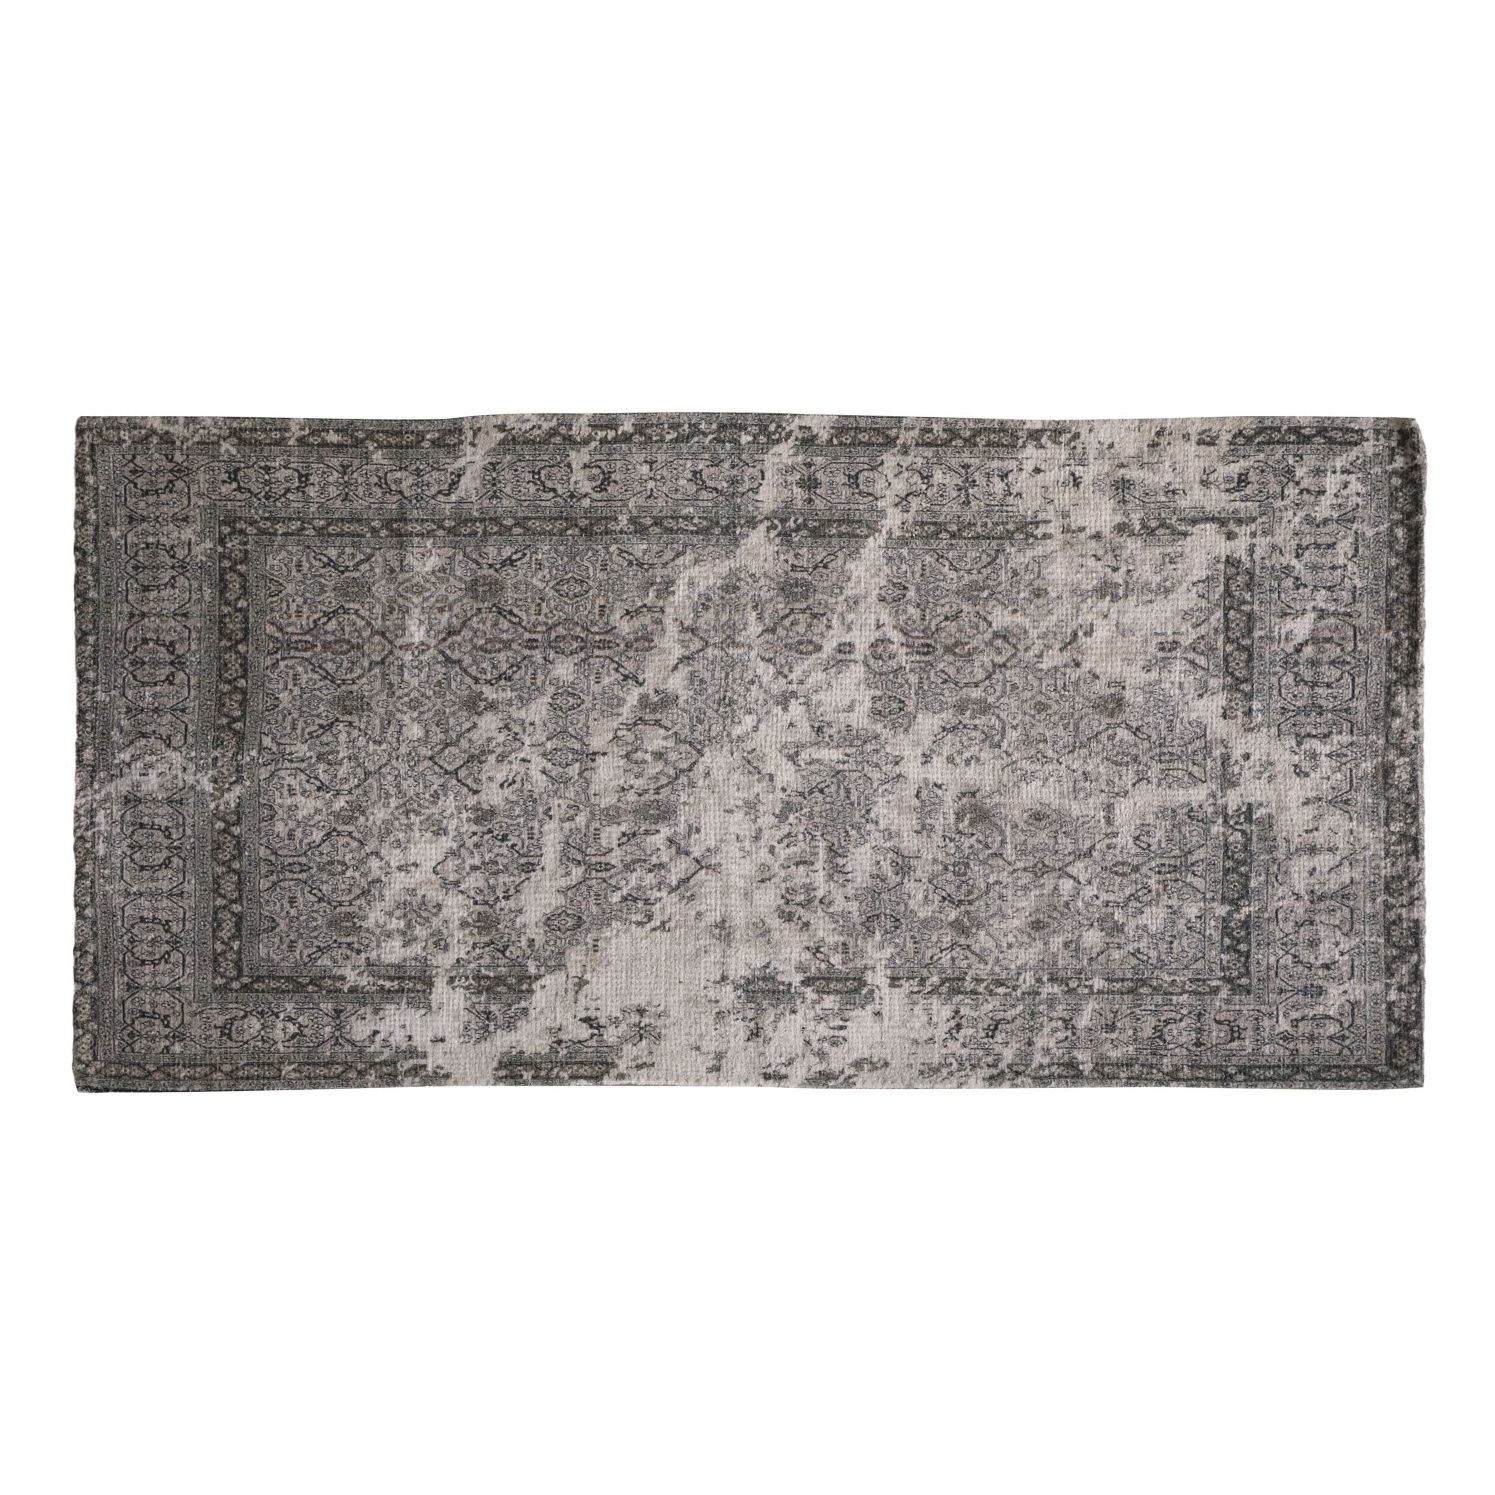 Mocca koberec se vzorem French print - 150*75 cm Chic Antique